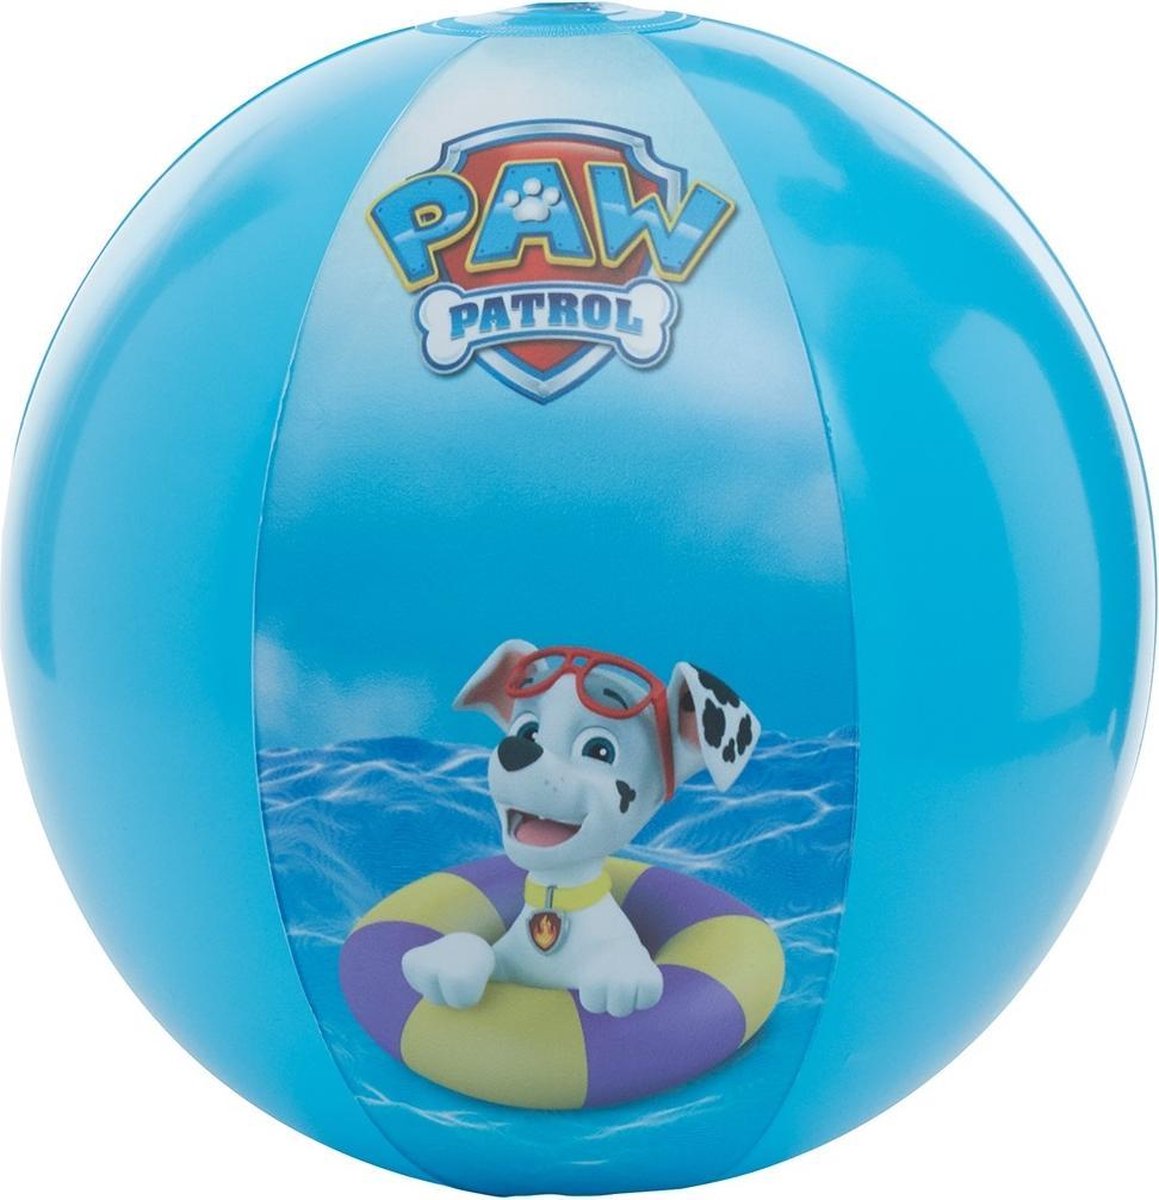 Paw Patrol opblaasbare strandbal 29 cm speelgoed - Hondjes Chase/Marshall/Rubble - Buitenspeelgoed strandballen - Opblaasballen - Waterspeelgoed - Peppa Pig